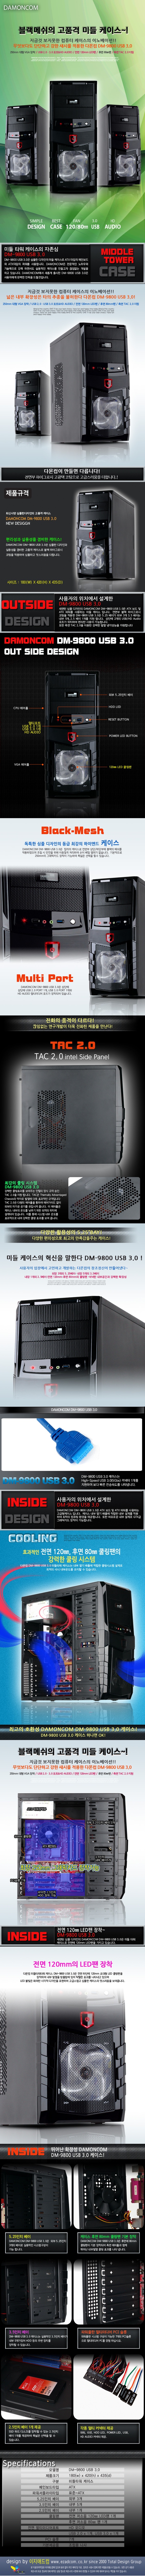 DM_9800_USB3.0_2.jpg